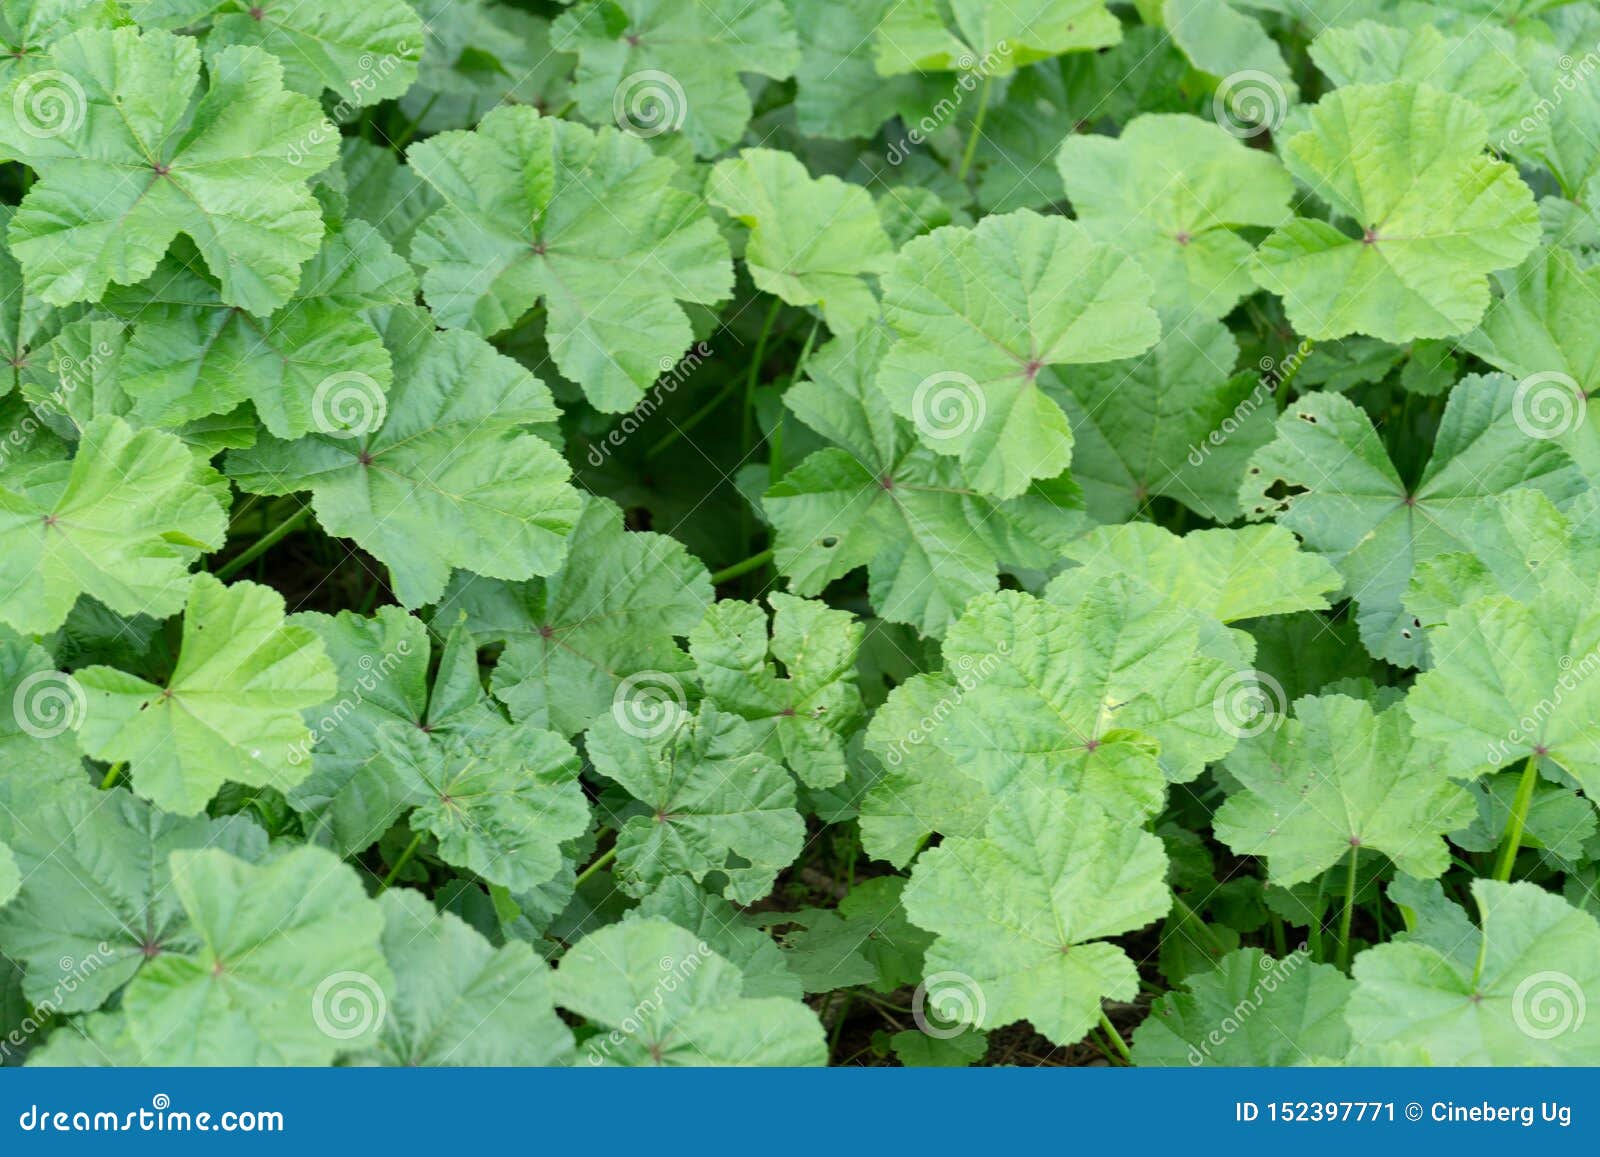 Malva plant stock image. Image of growth, malvaceae - 152397771